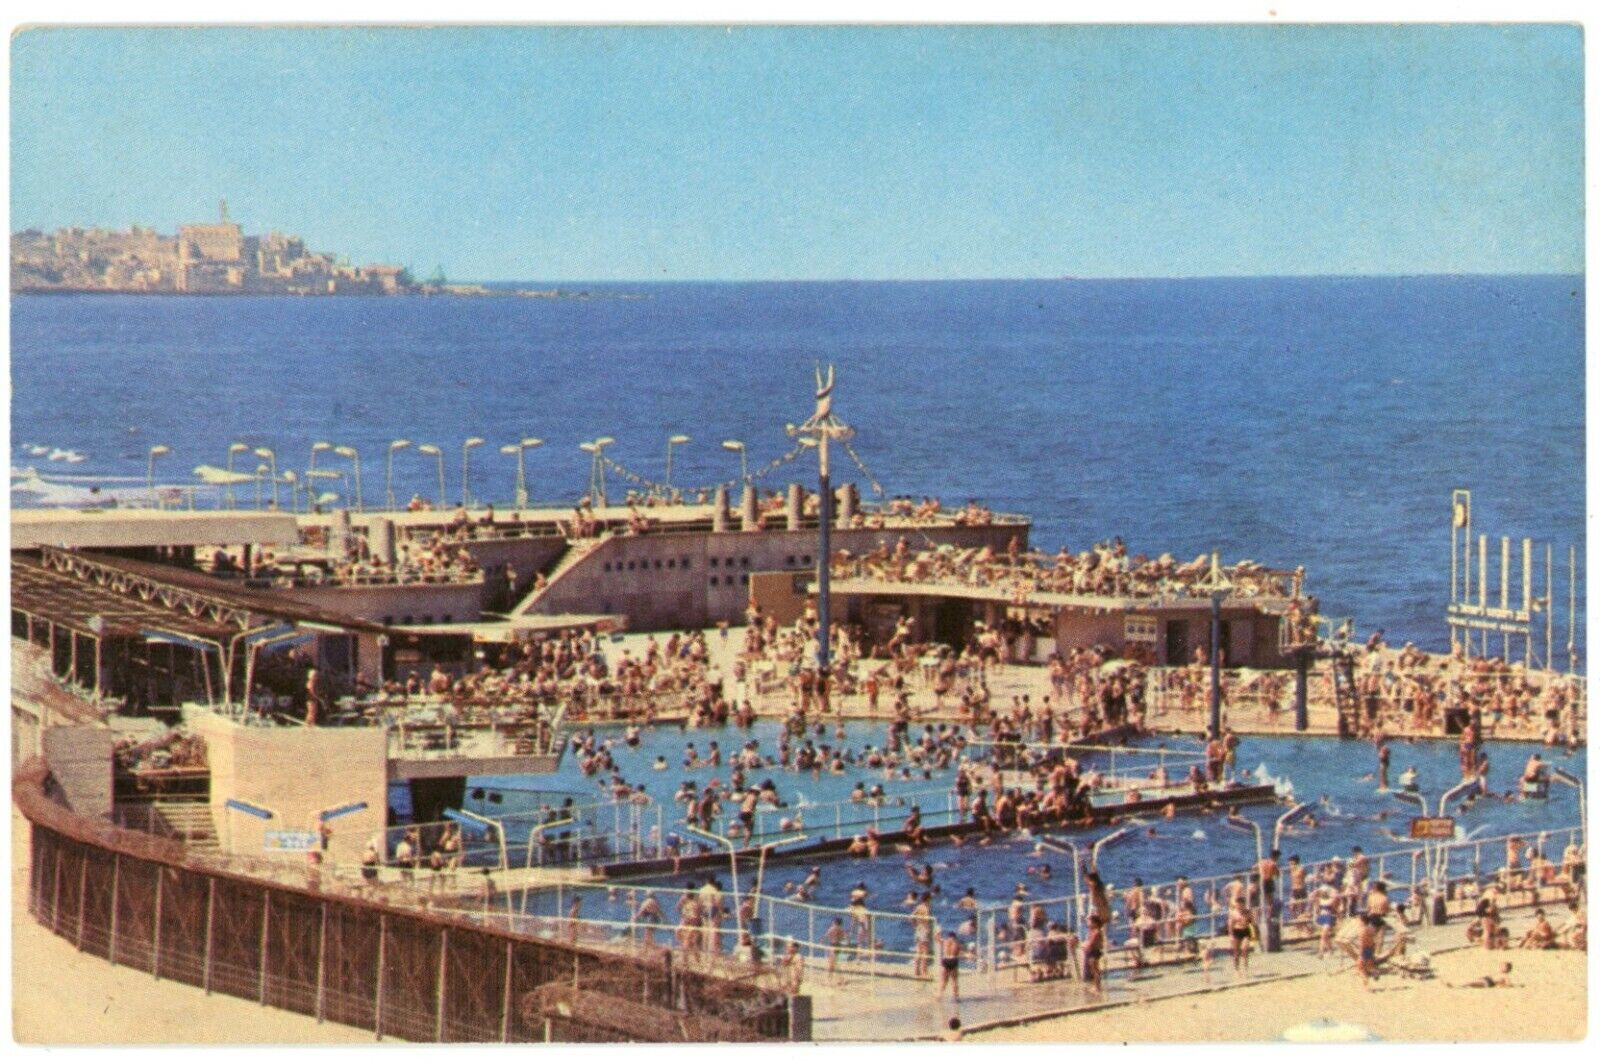 Huge Crowd Enjoying At Swimming Pool On The Sea Shore, Tel Aviv, Israel Postcard